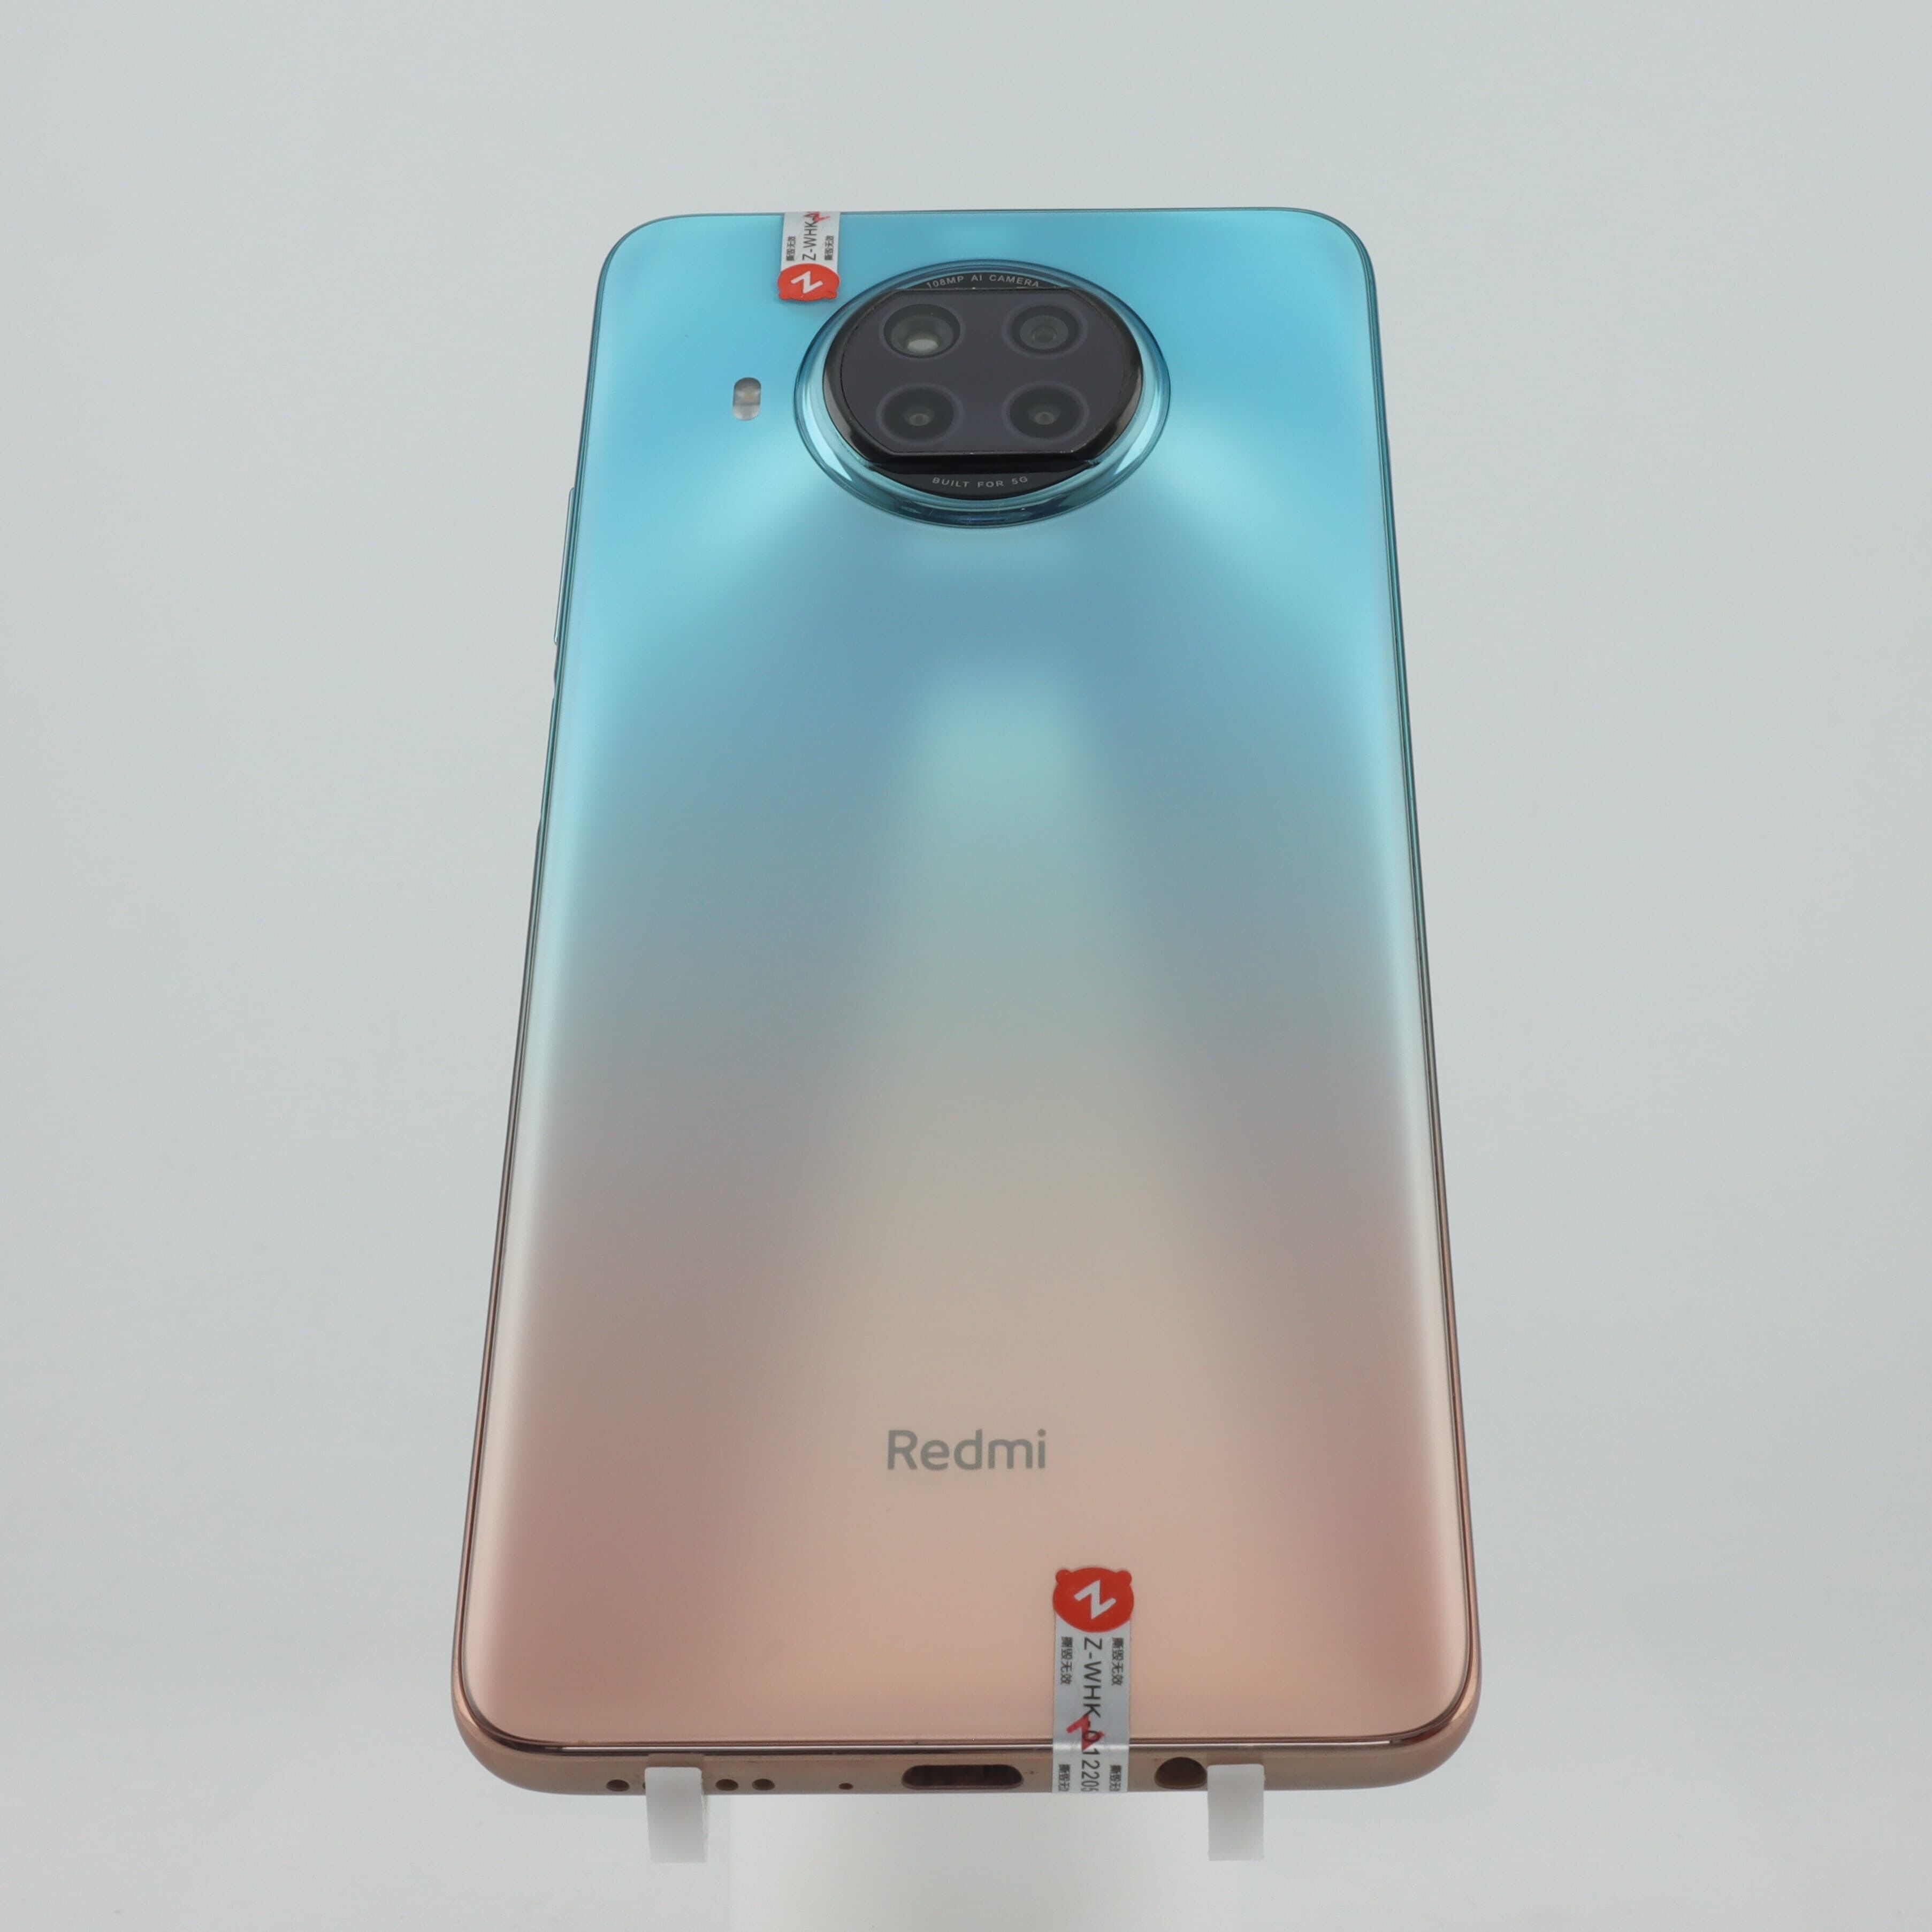 Redmi Note 9 Pro 5G